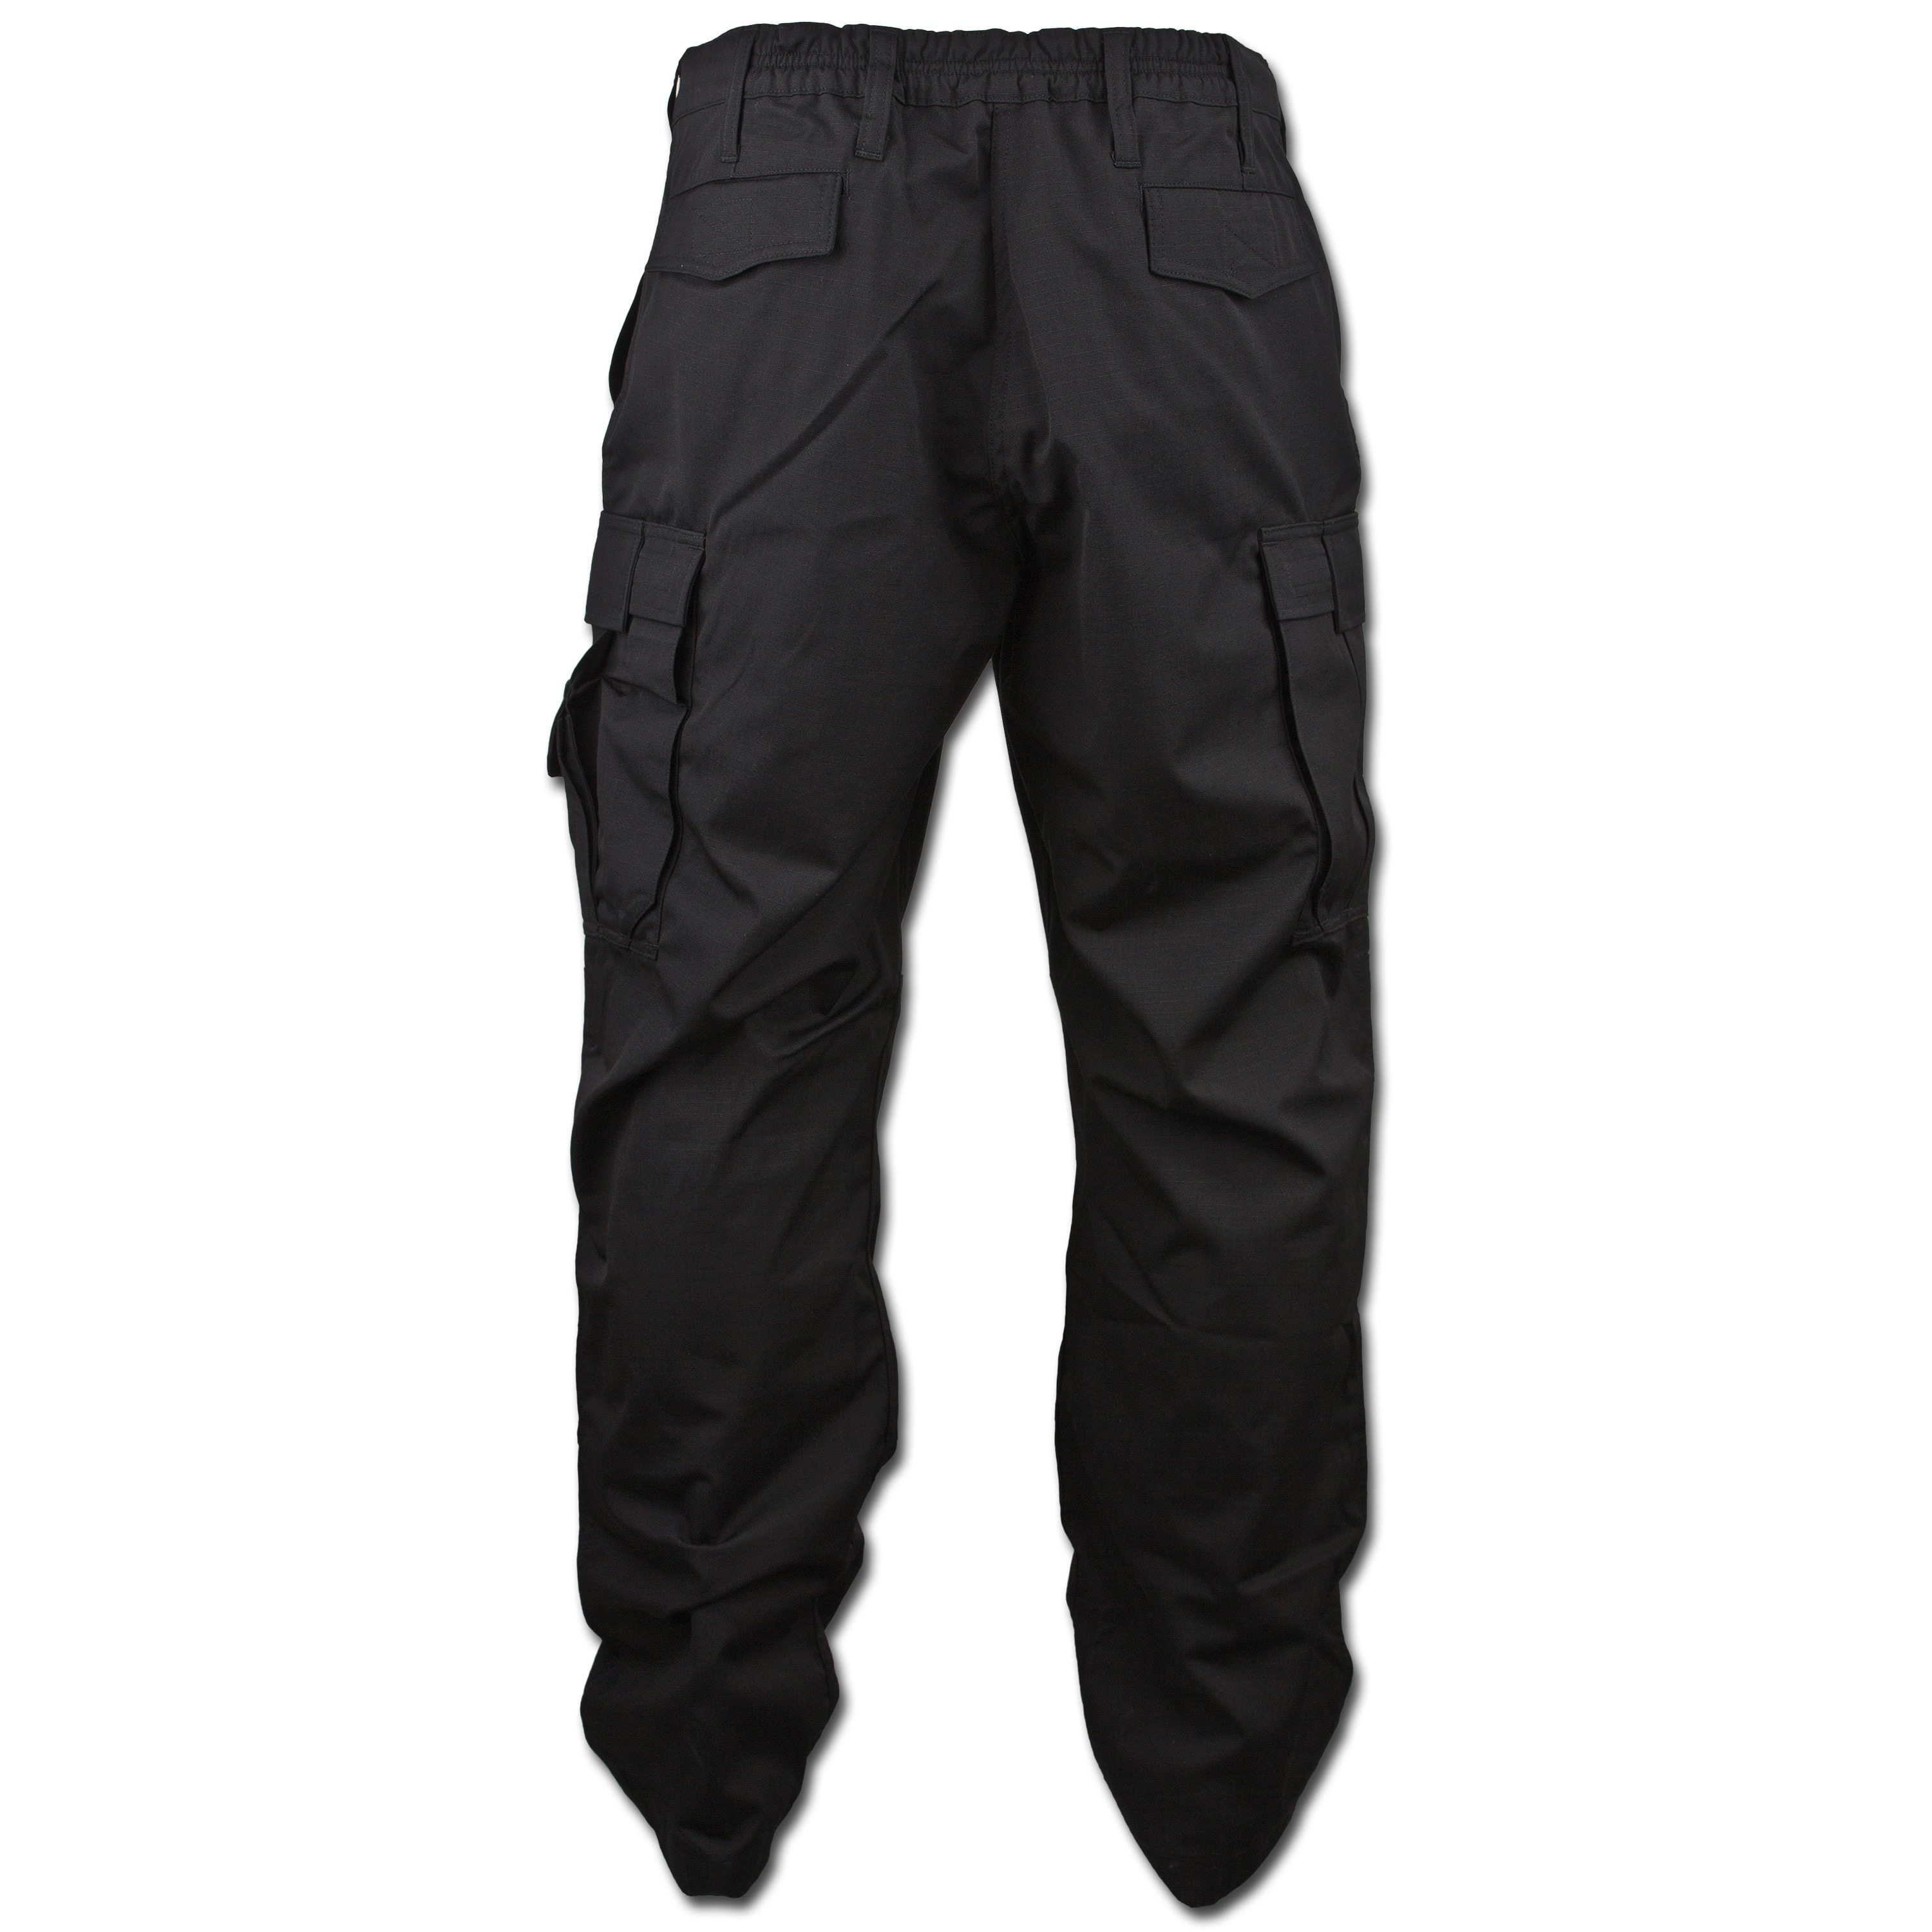 Purchase the Leo Köhler Tactical Pants black by ASMC